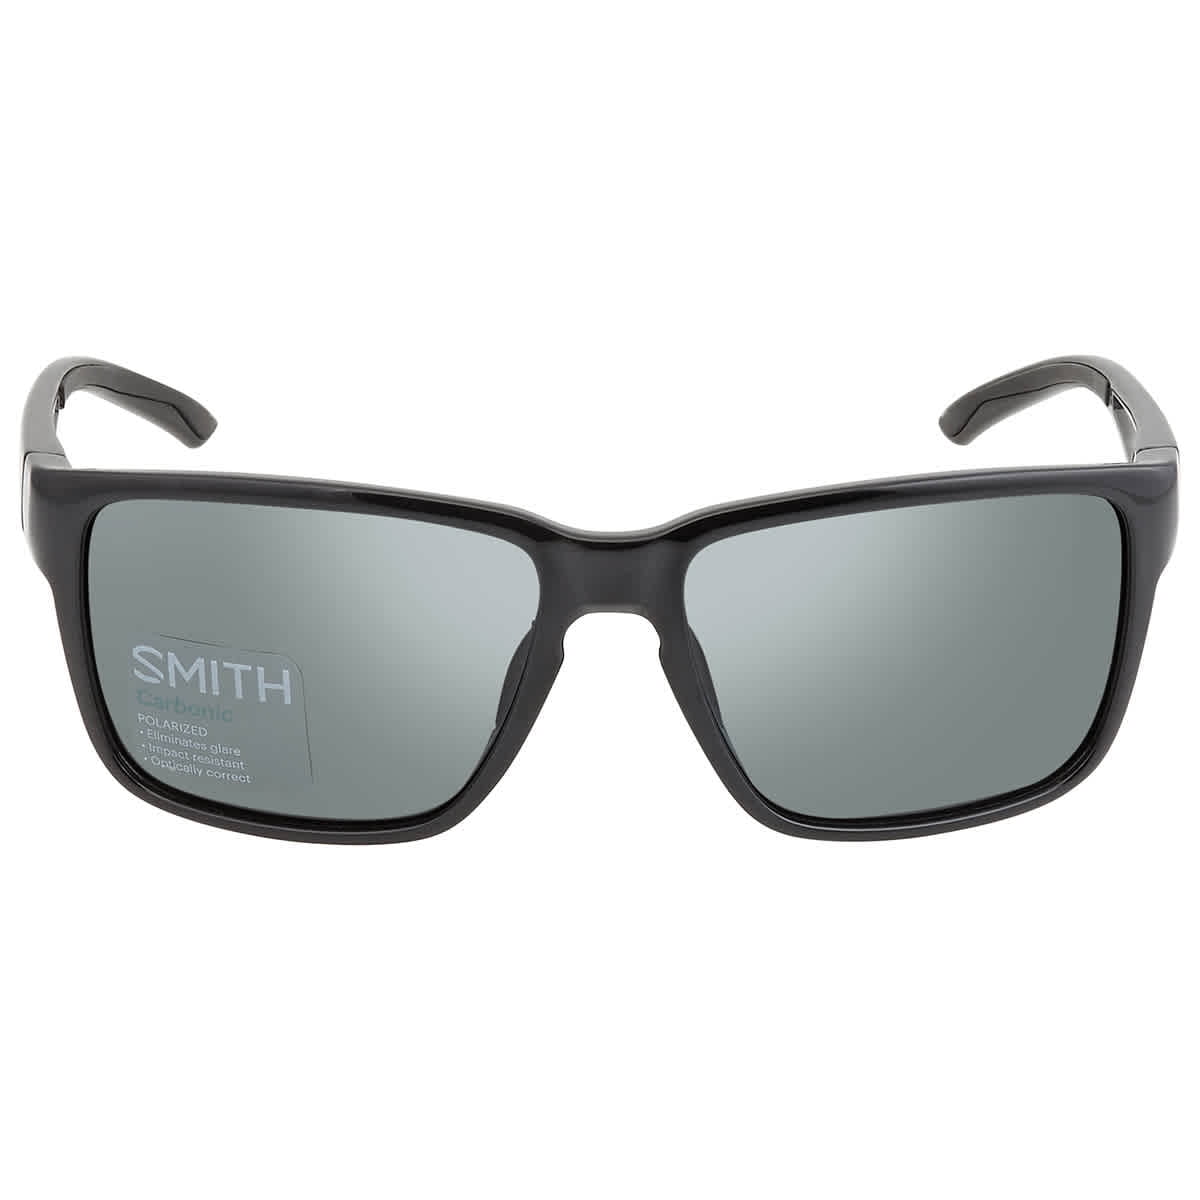 Smith Emerge Polarized Grey Square Men's Sunglasses 204055 807/M9